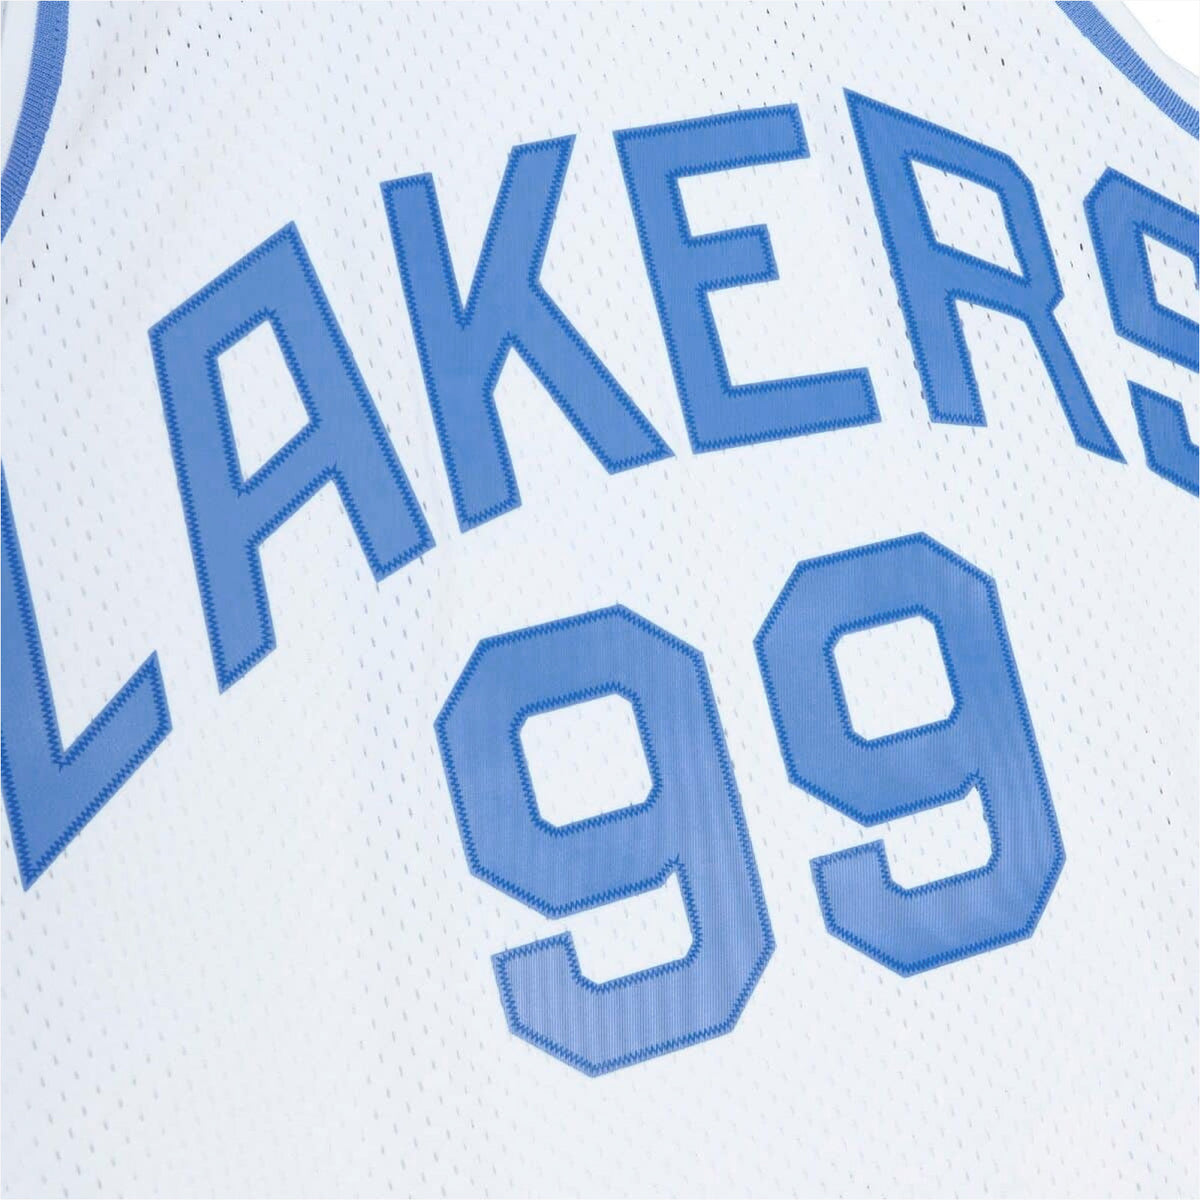 GEORGE MIKAN #99 MPLS Lakers Jersey SGA Retirement Ceremony 10/30/22 SZ XL